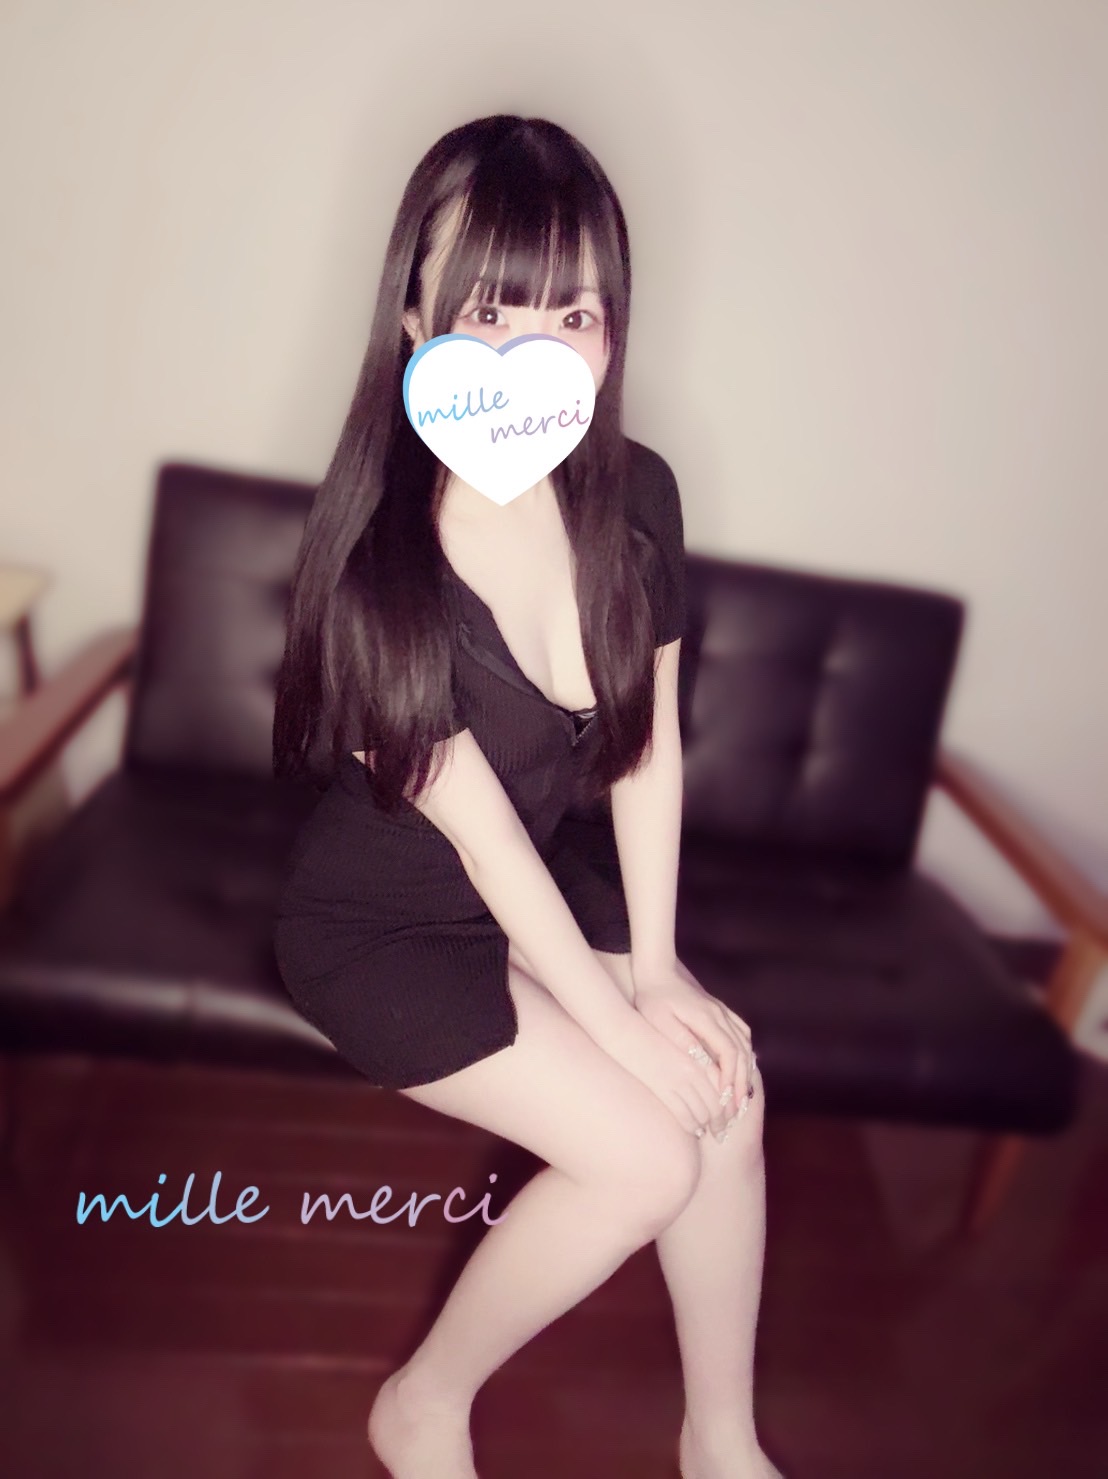 mille-merci～ミルメルシィ勝川|湊うい